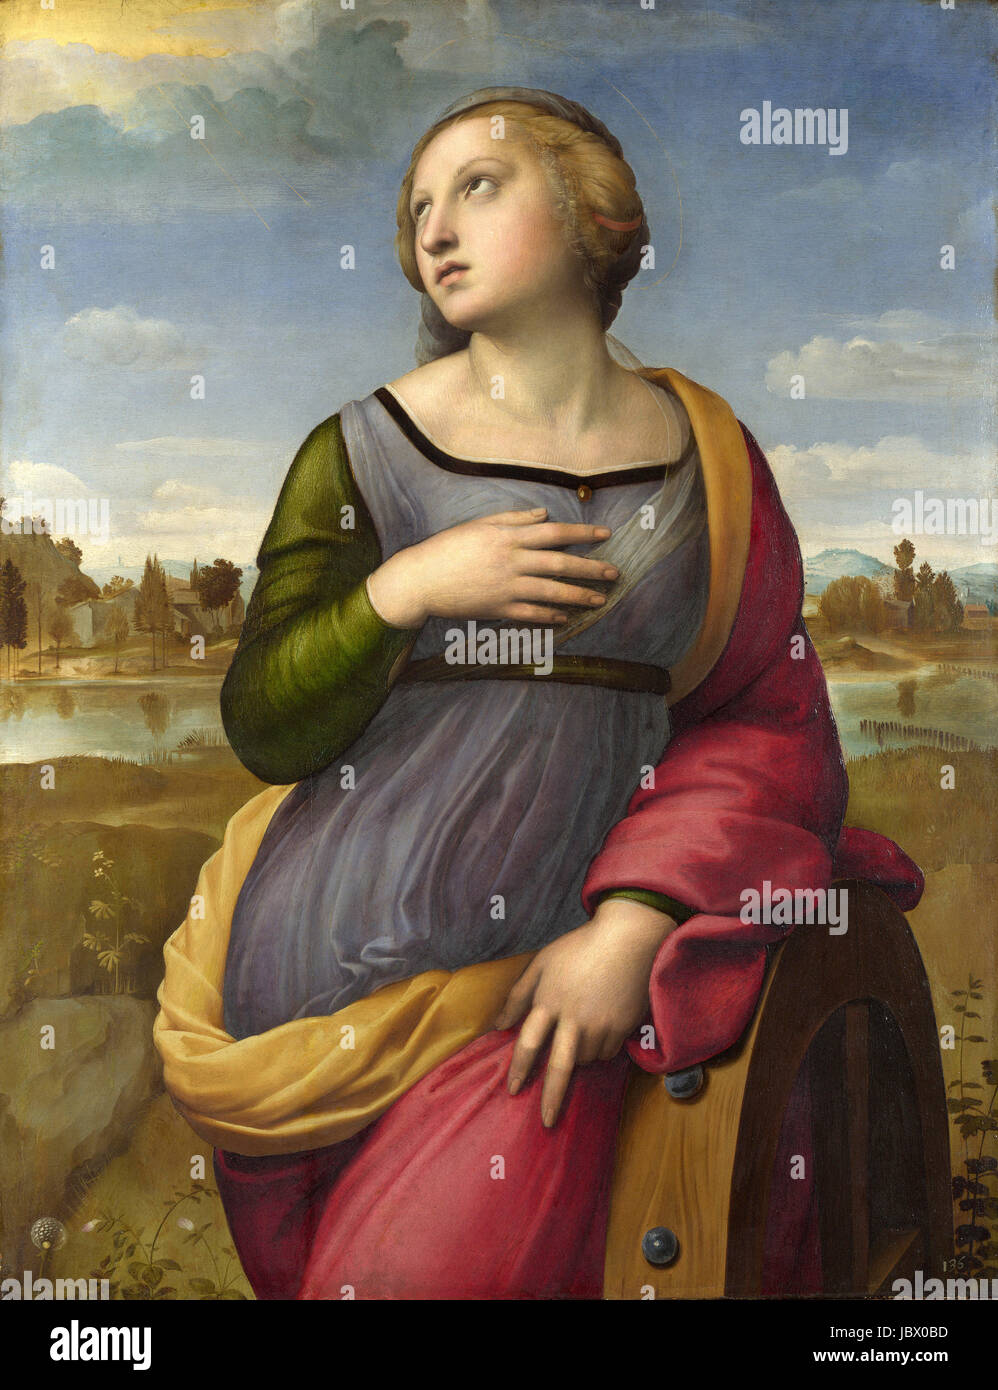 Raffaello Sanzio da Urbino - Raphael - Sainte Catherine d'Alexandrie 1507 Banque D'Images